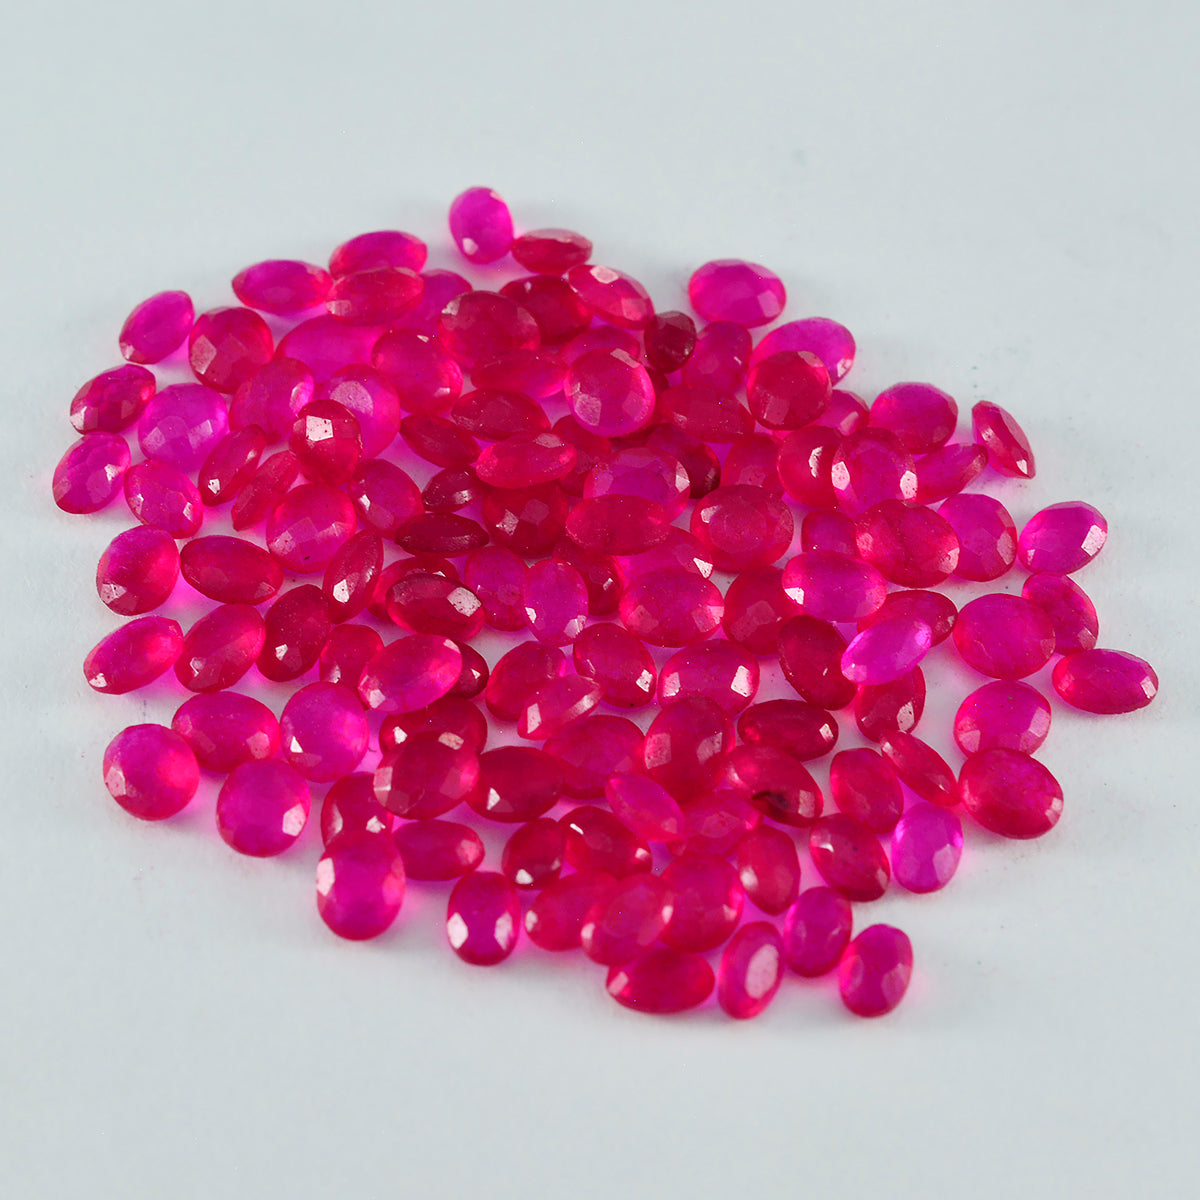 Riyogems 1PC Genuine Red Jasper Faceted 3x5 mm Oval Shape A+1 Quality Loose Gems